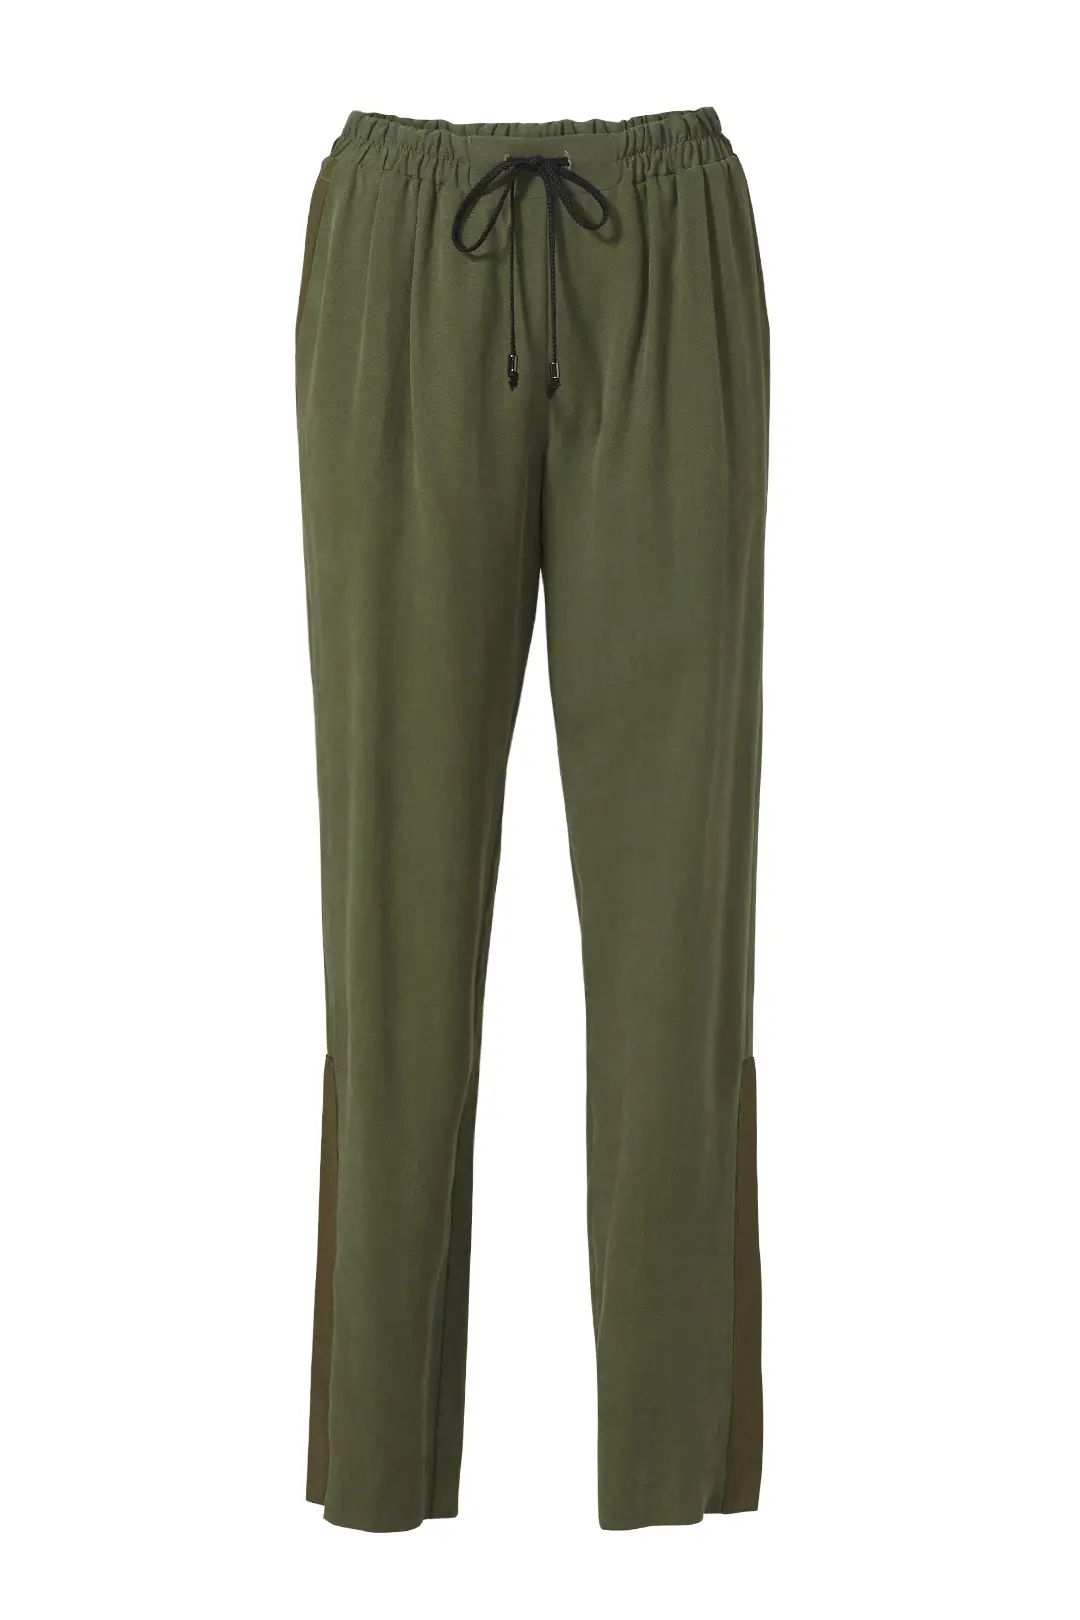 Waverly Grey Olive Serena Pants | Rent The Runway